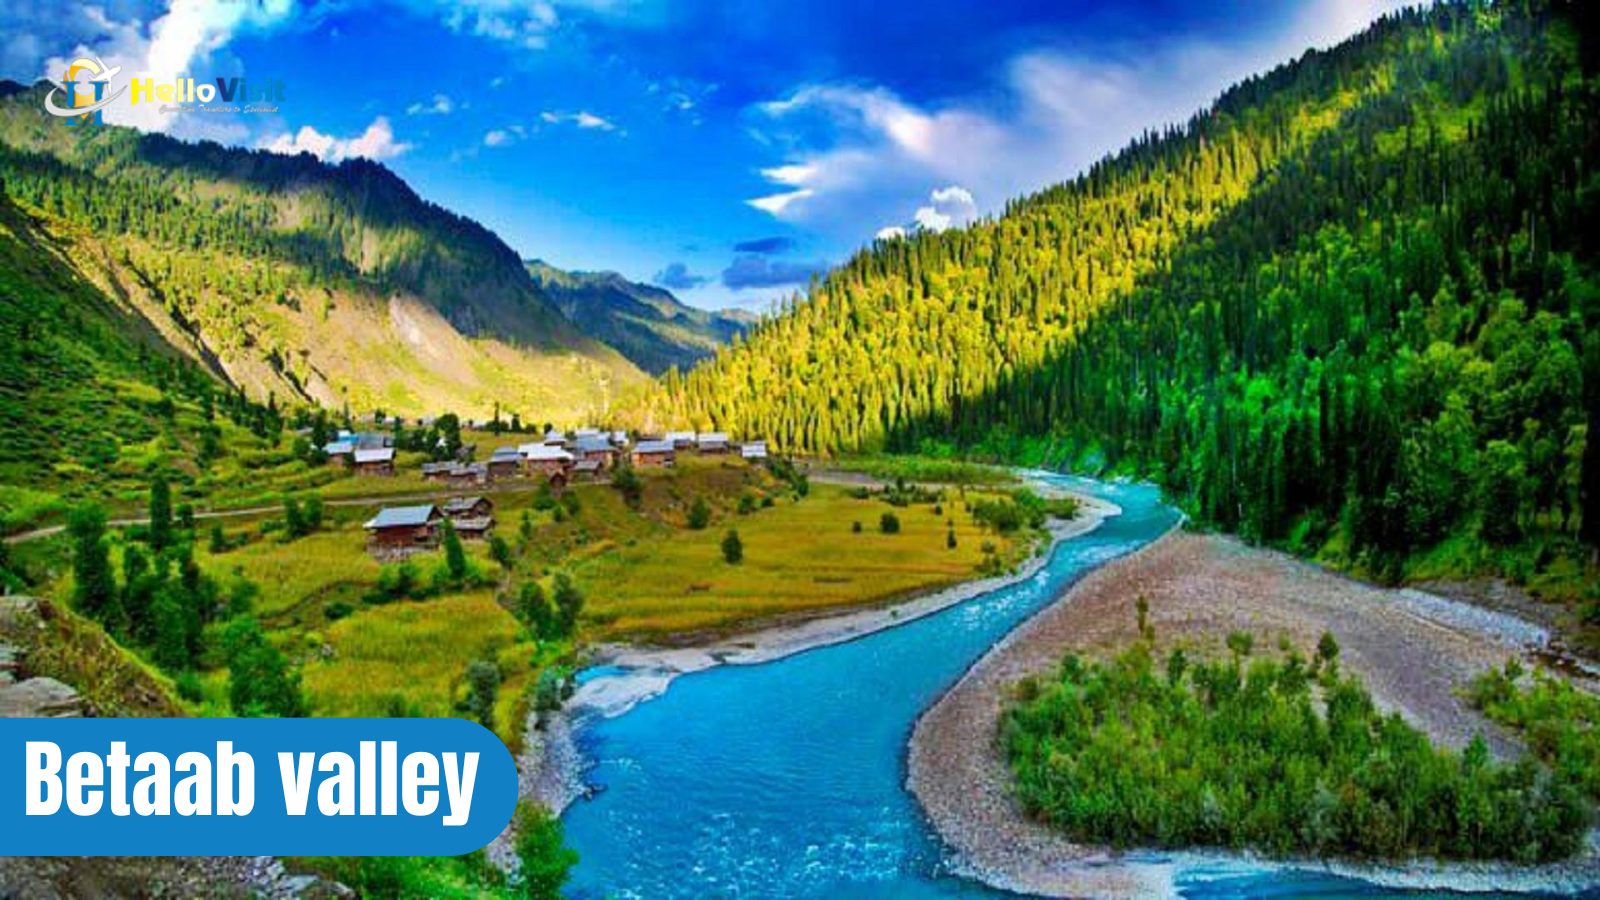 Betaab valley, Jammu and Kashmir